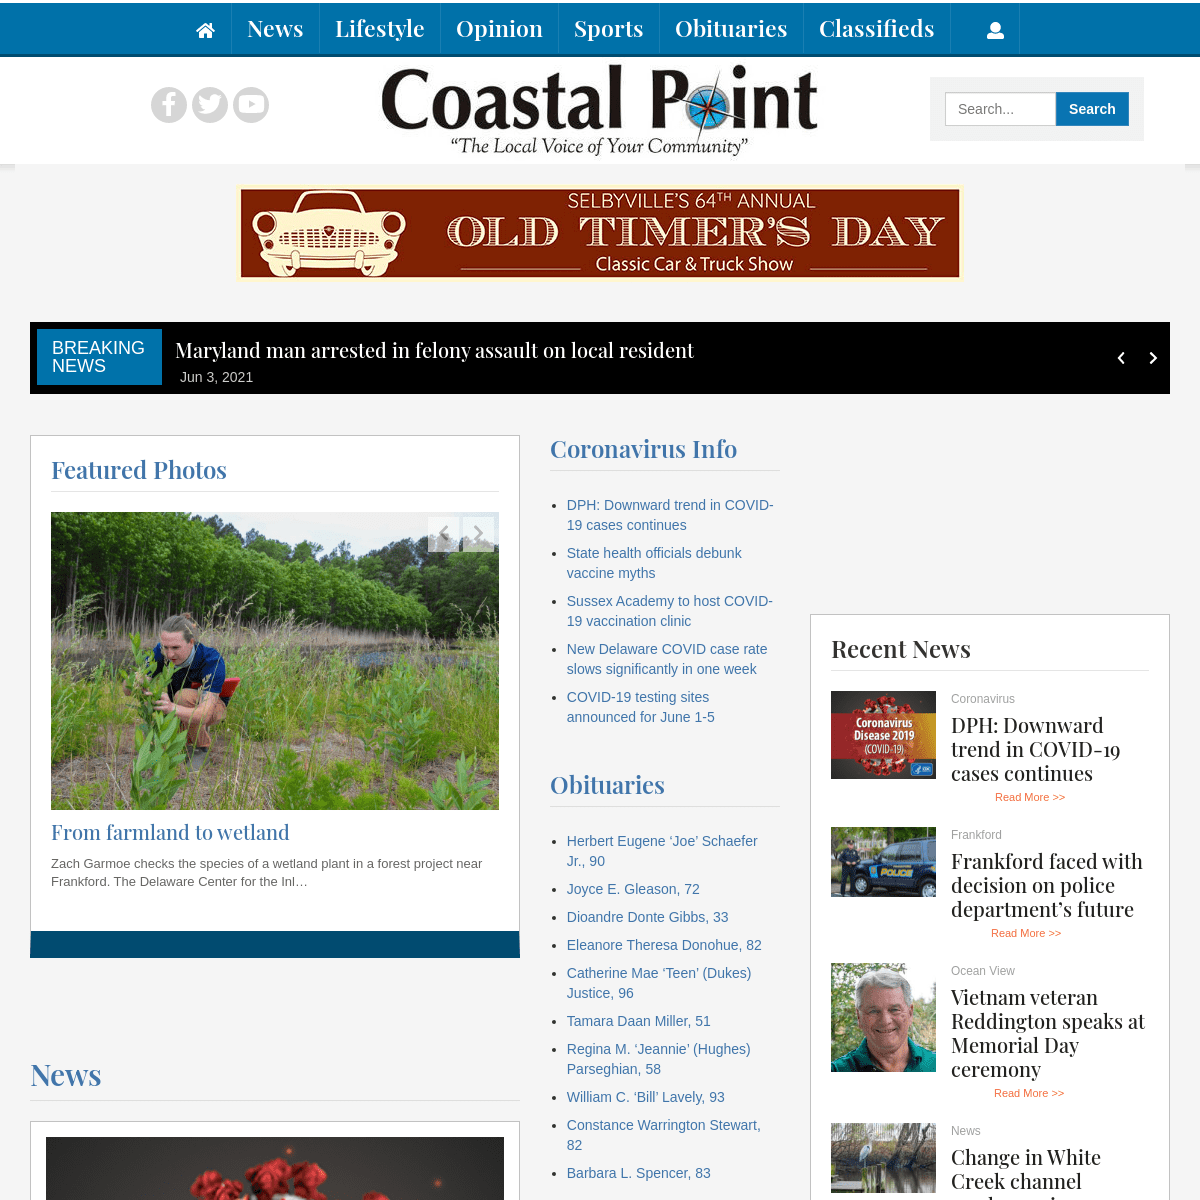 A complete backup of https://coastalpoint.com